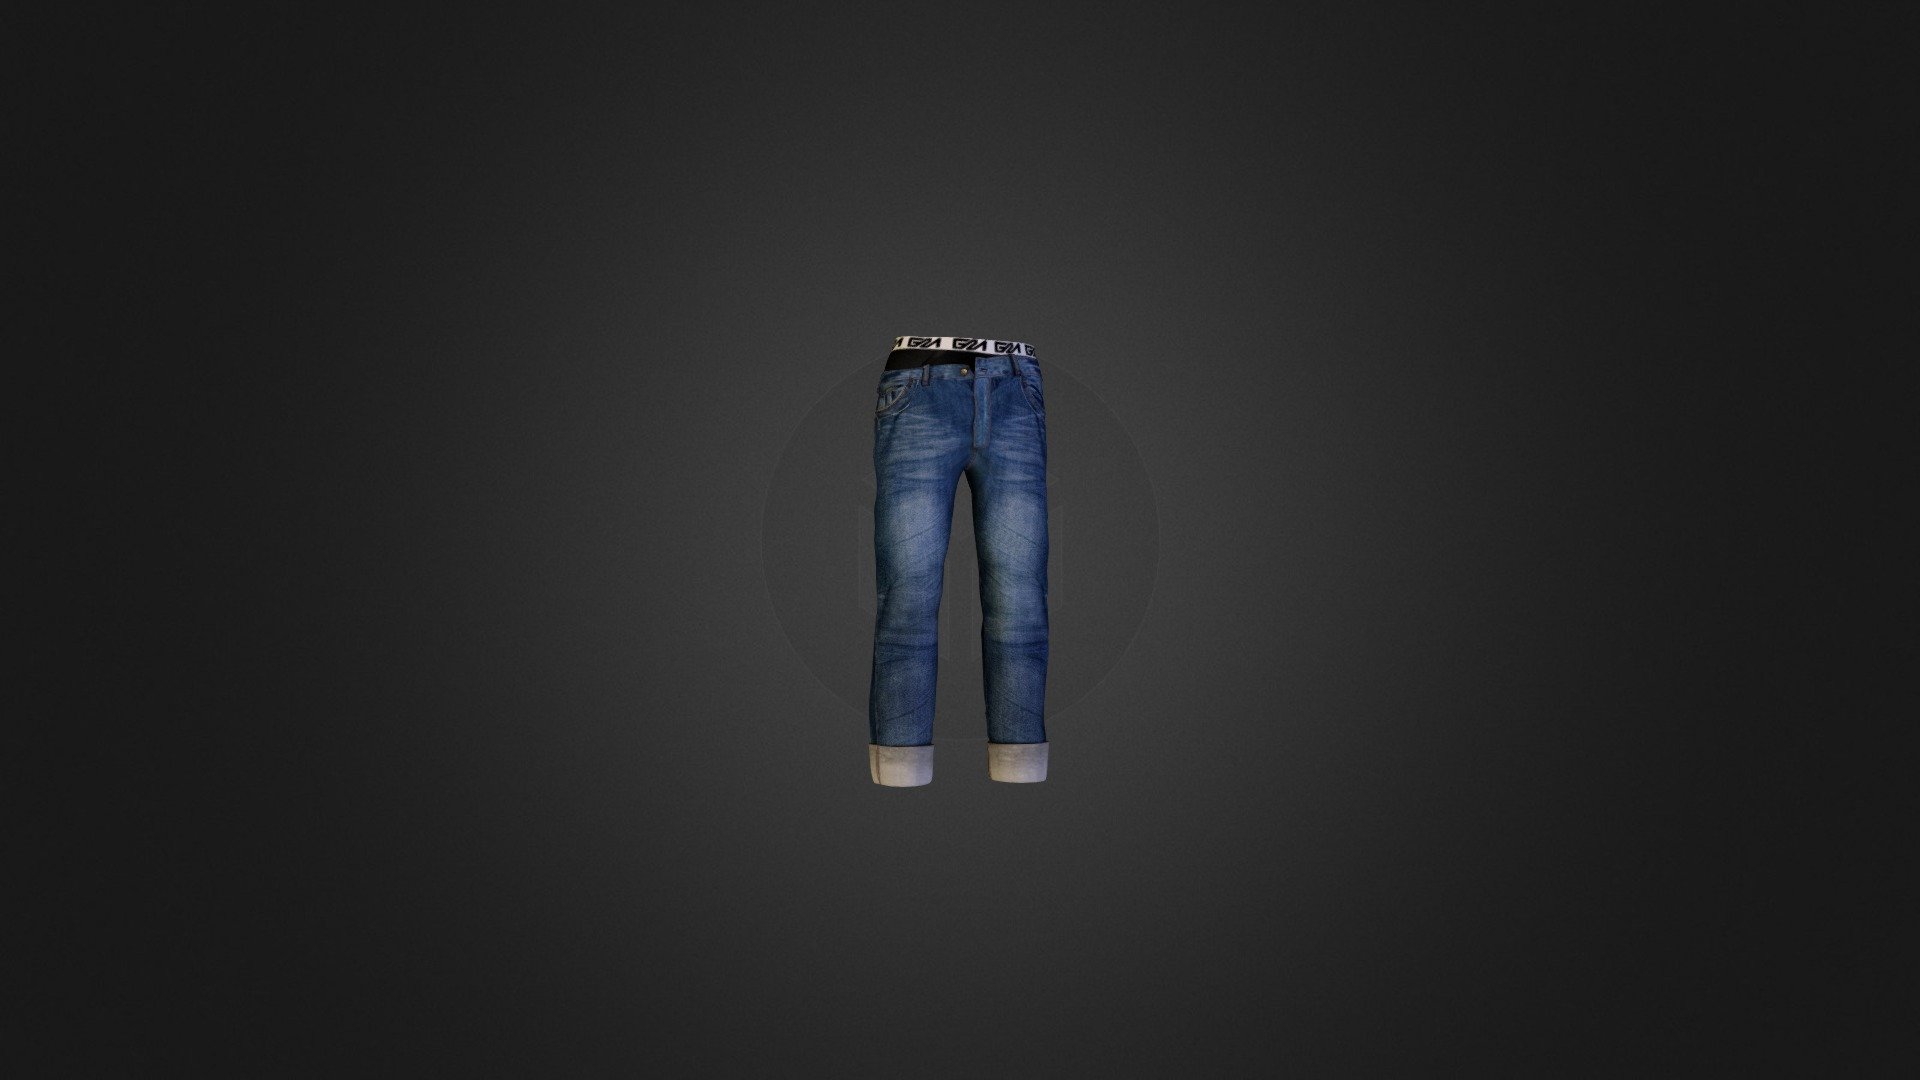 Baggy Jeans_final - 3D model by vikas3dfreelancer 3d model